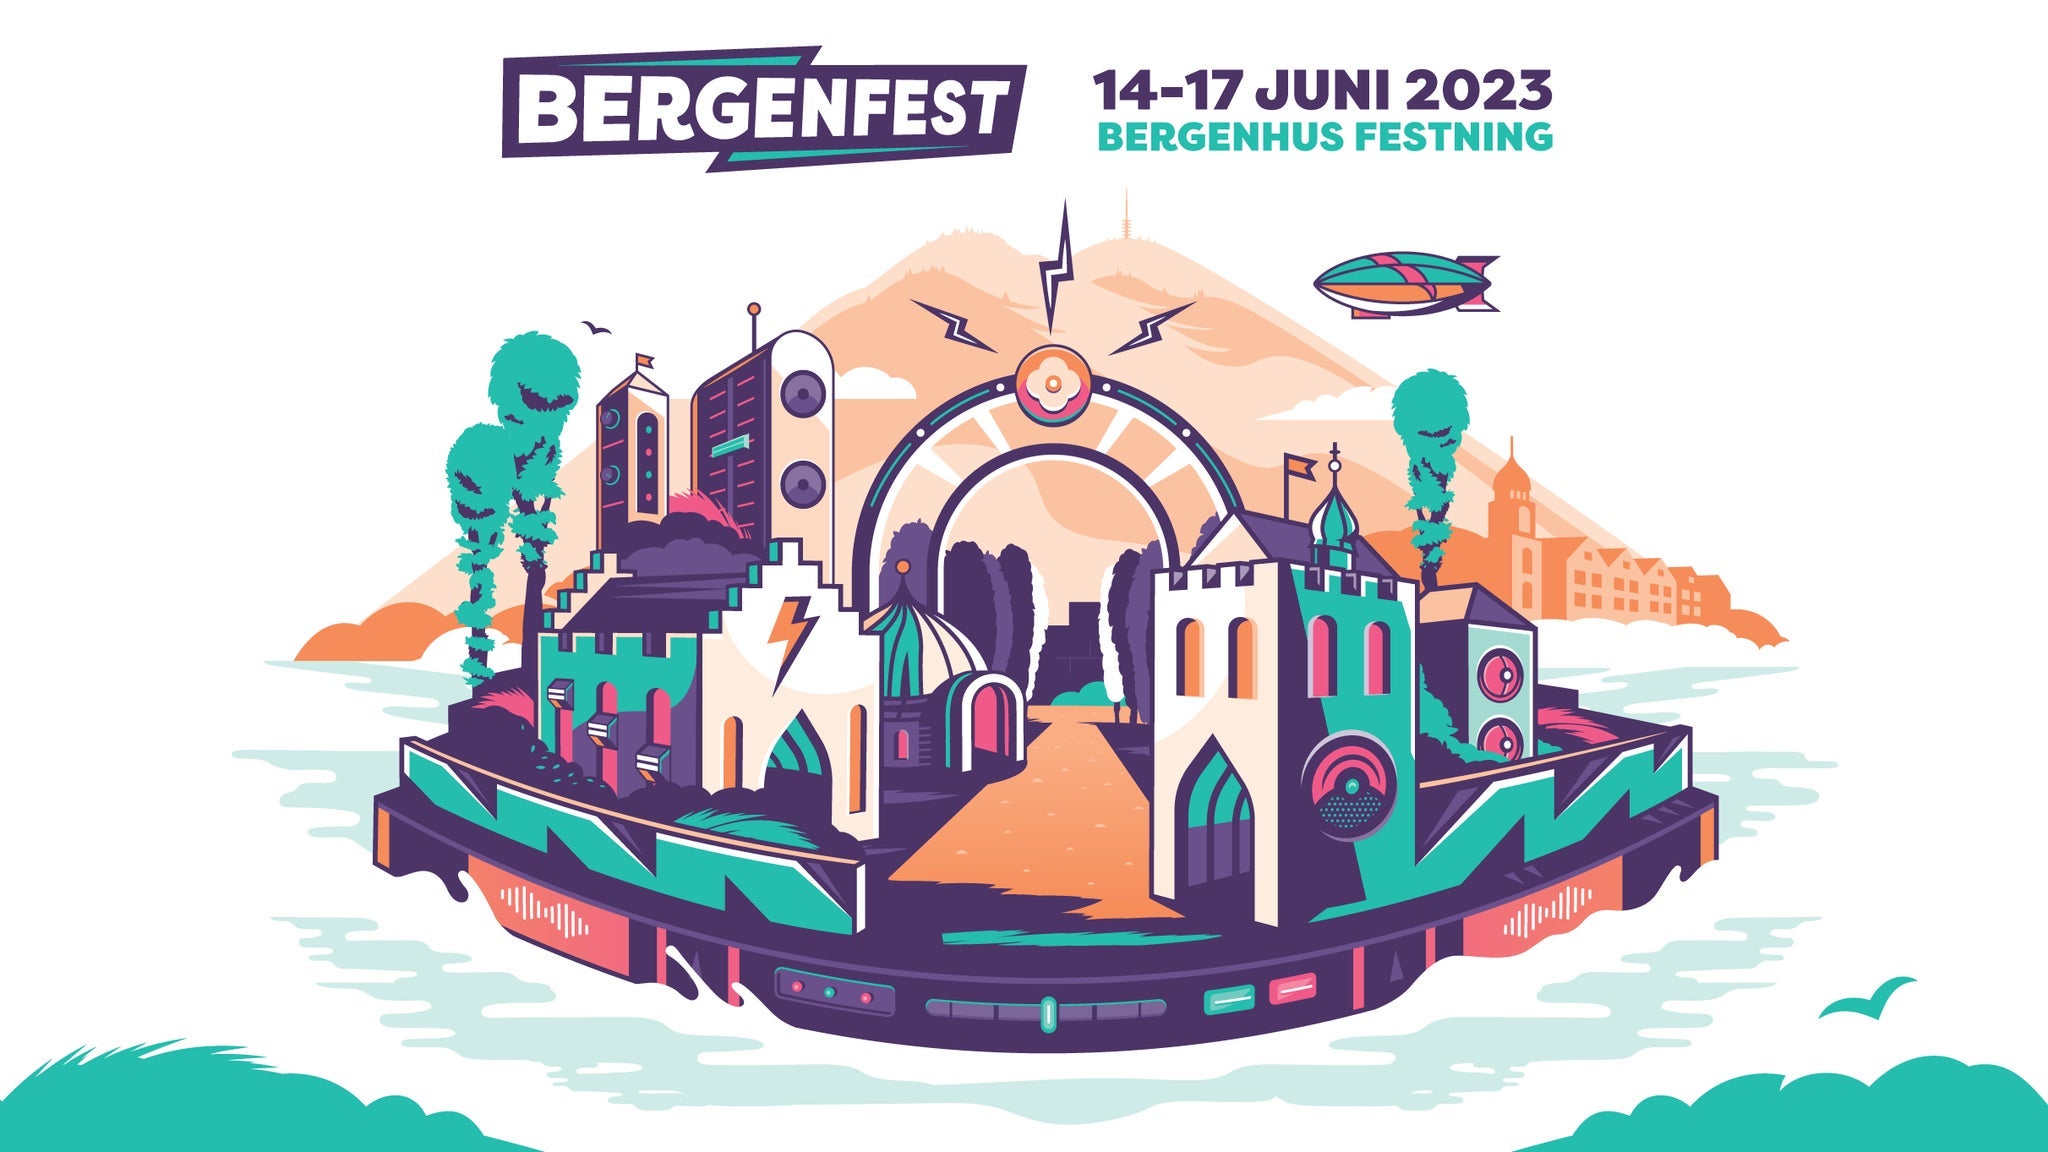 Bergenfest presale information on freepresalepasswords.com